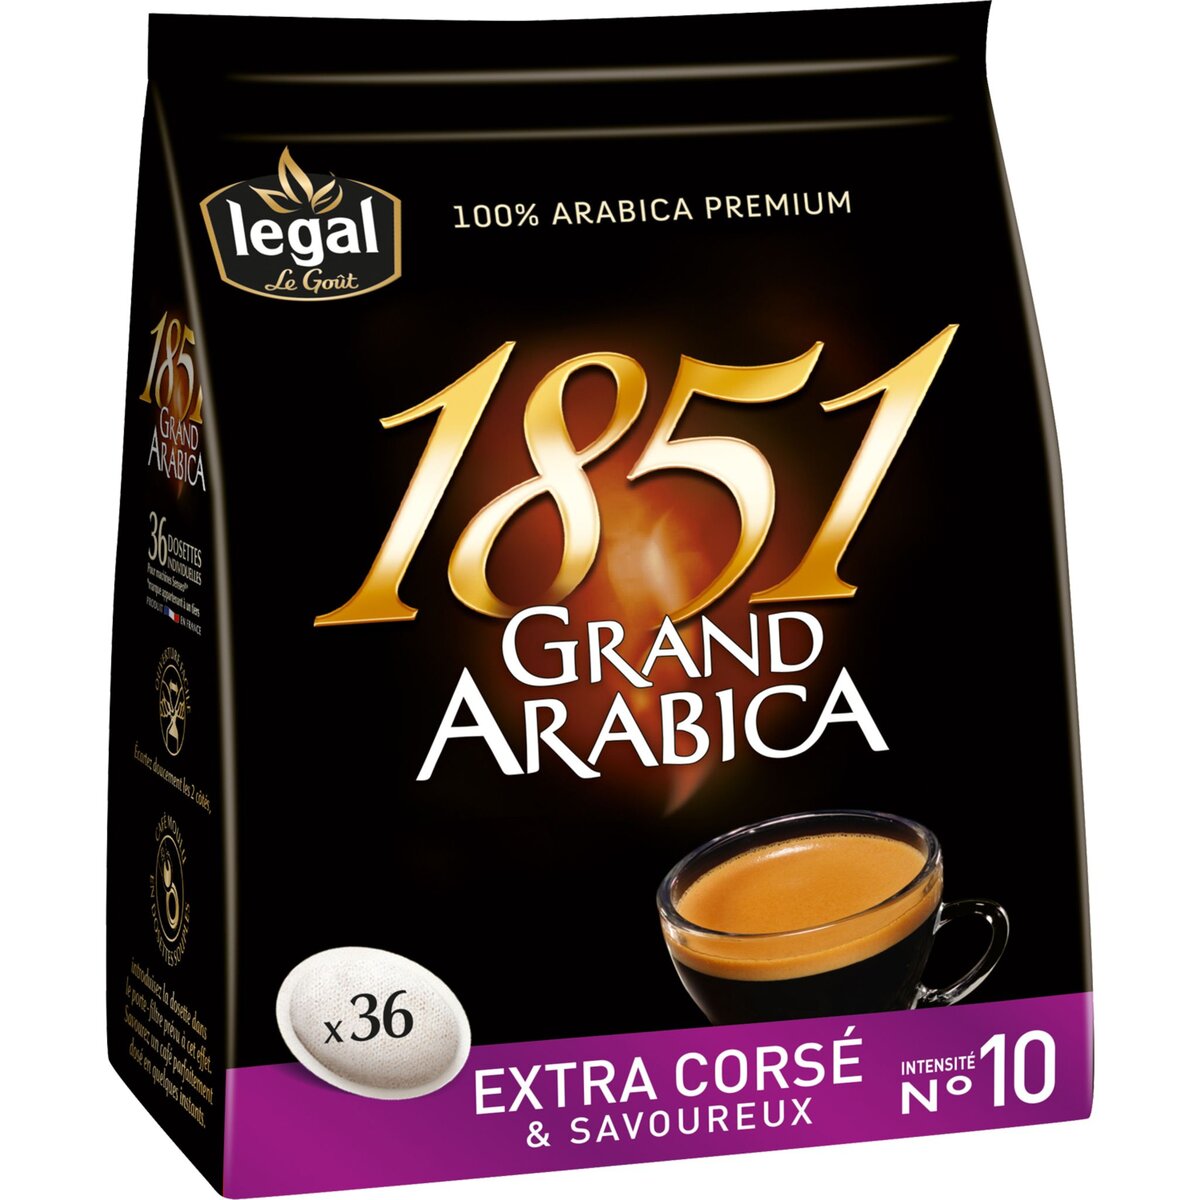 LEGAL Legal 1851 café grand arabica extra corsé dosette x36 -250g